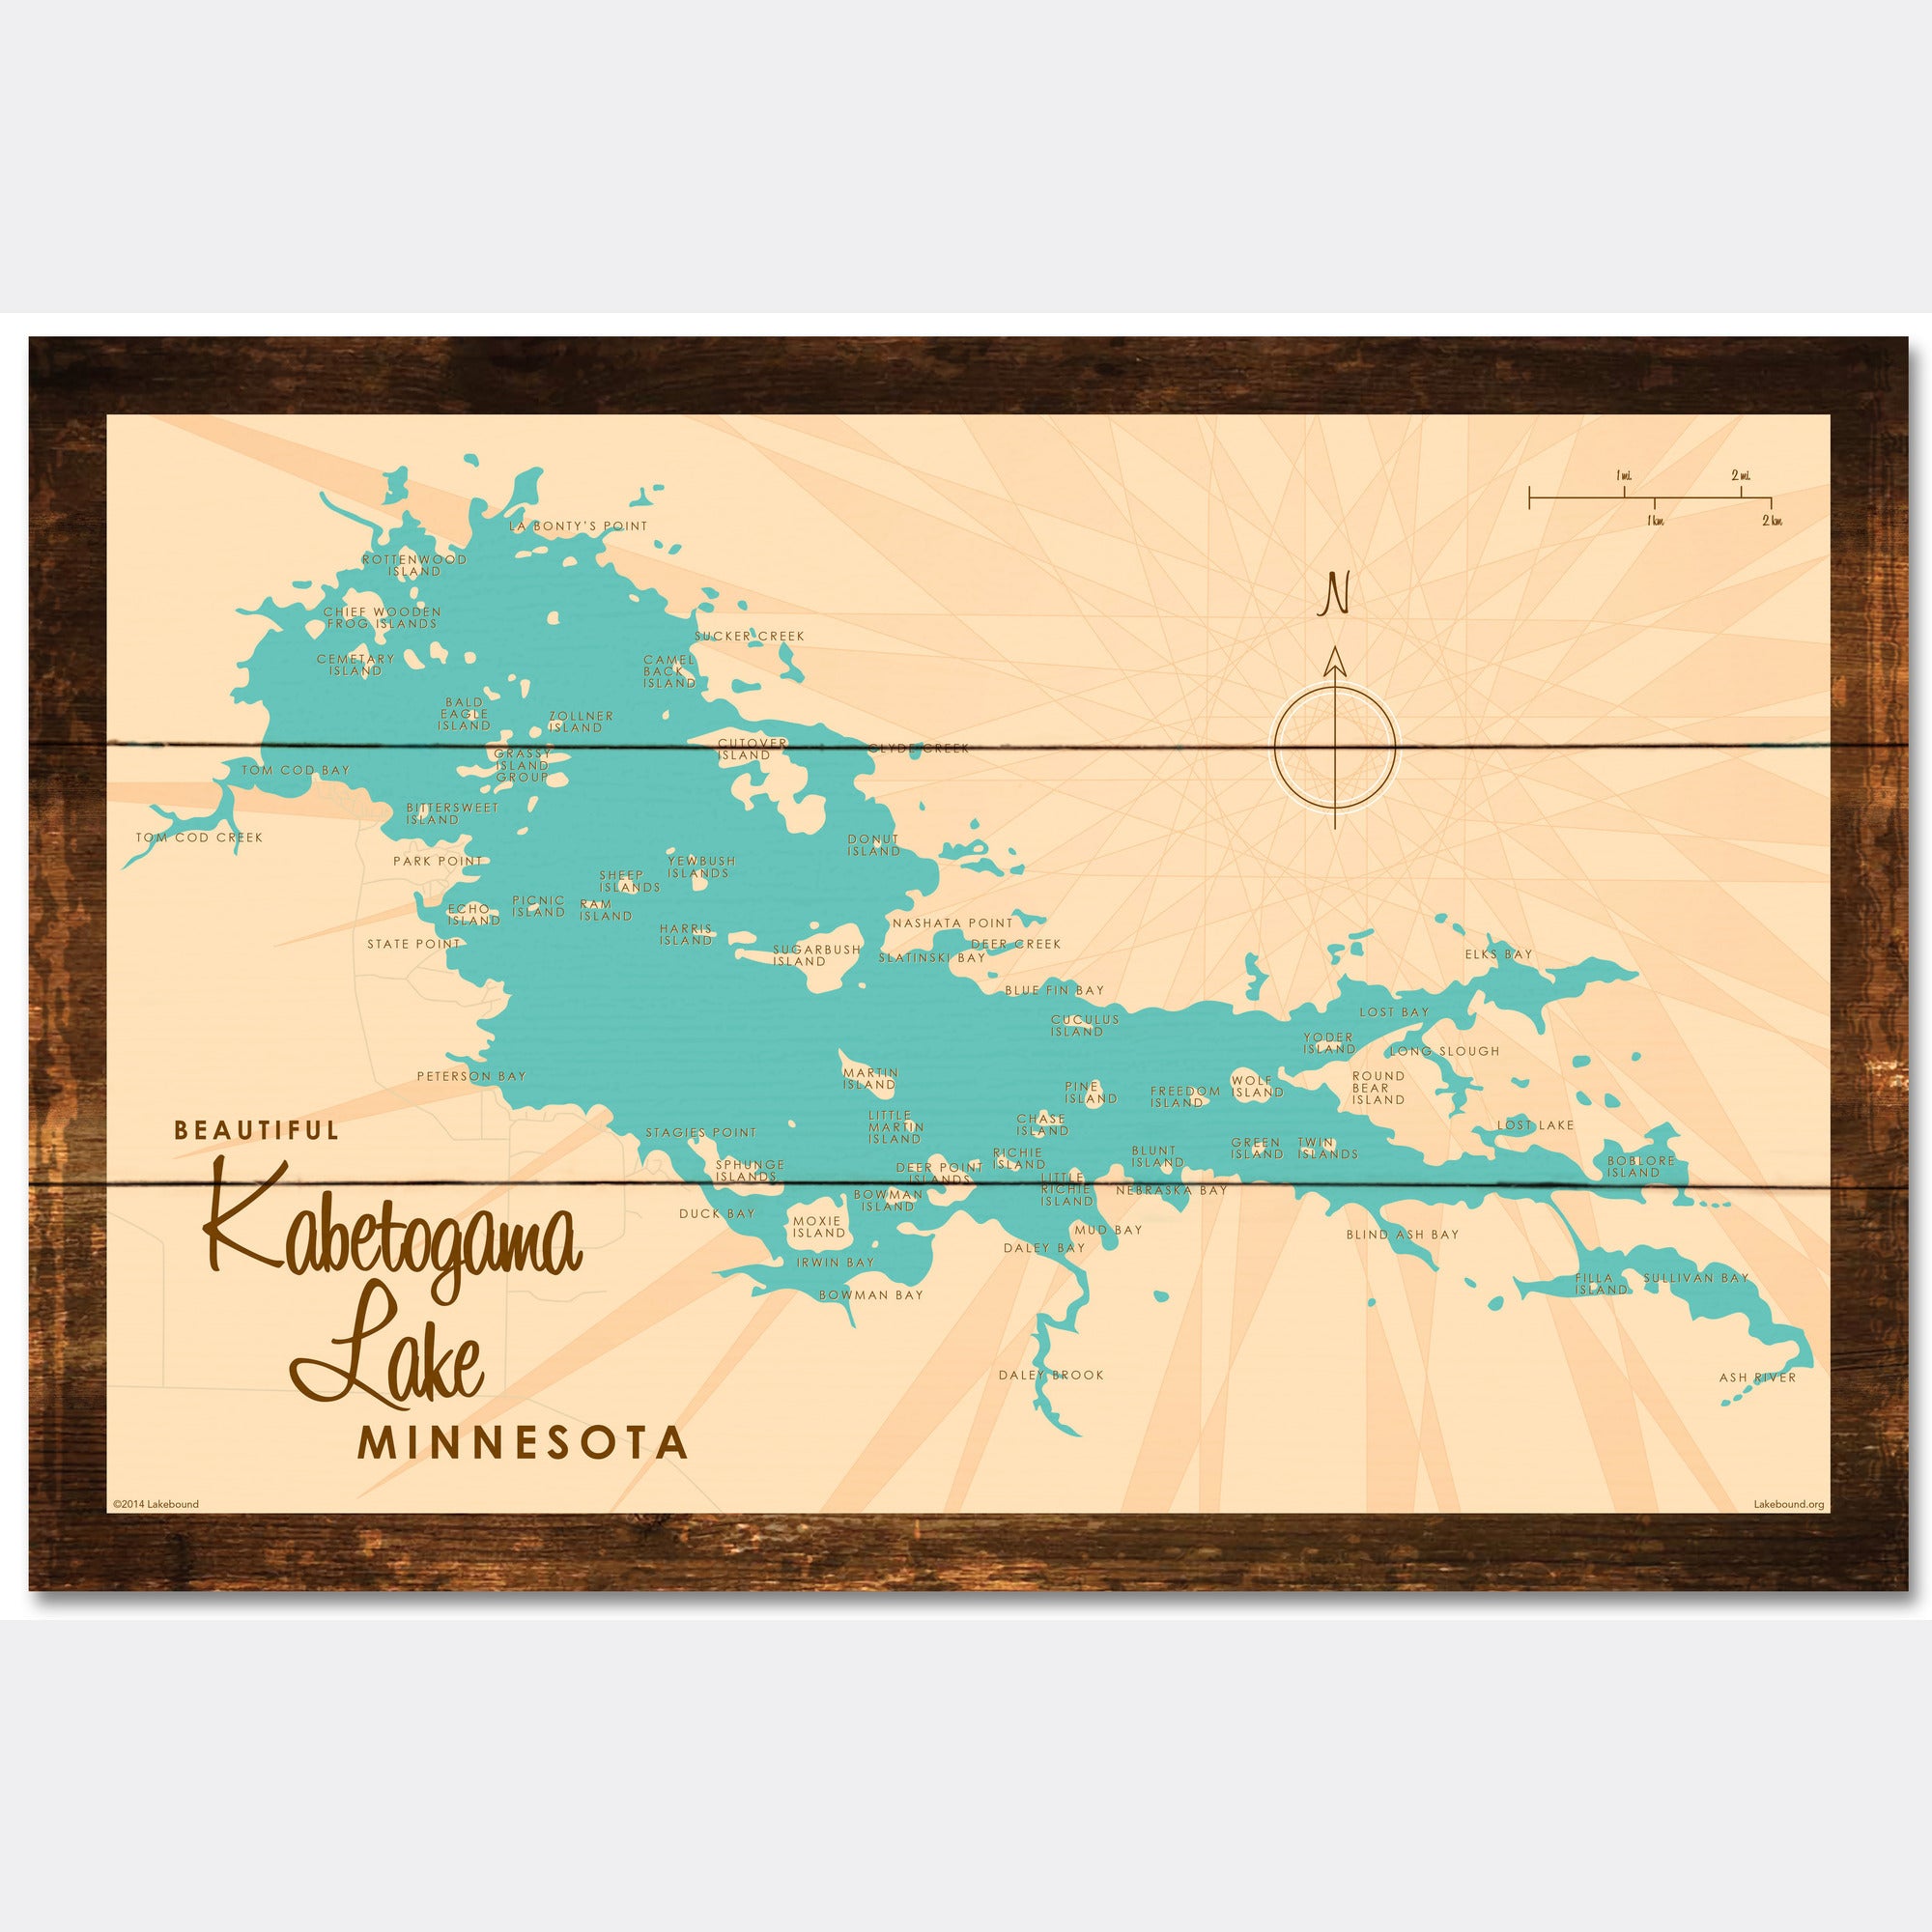 Kabetogama Lake Minnesota, Rustic Wood Sign Map Art